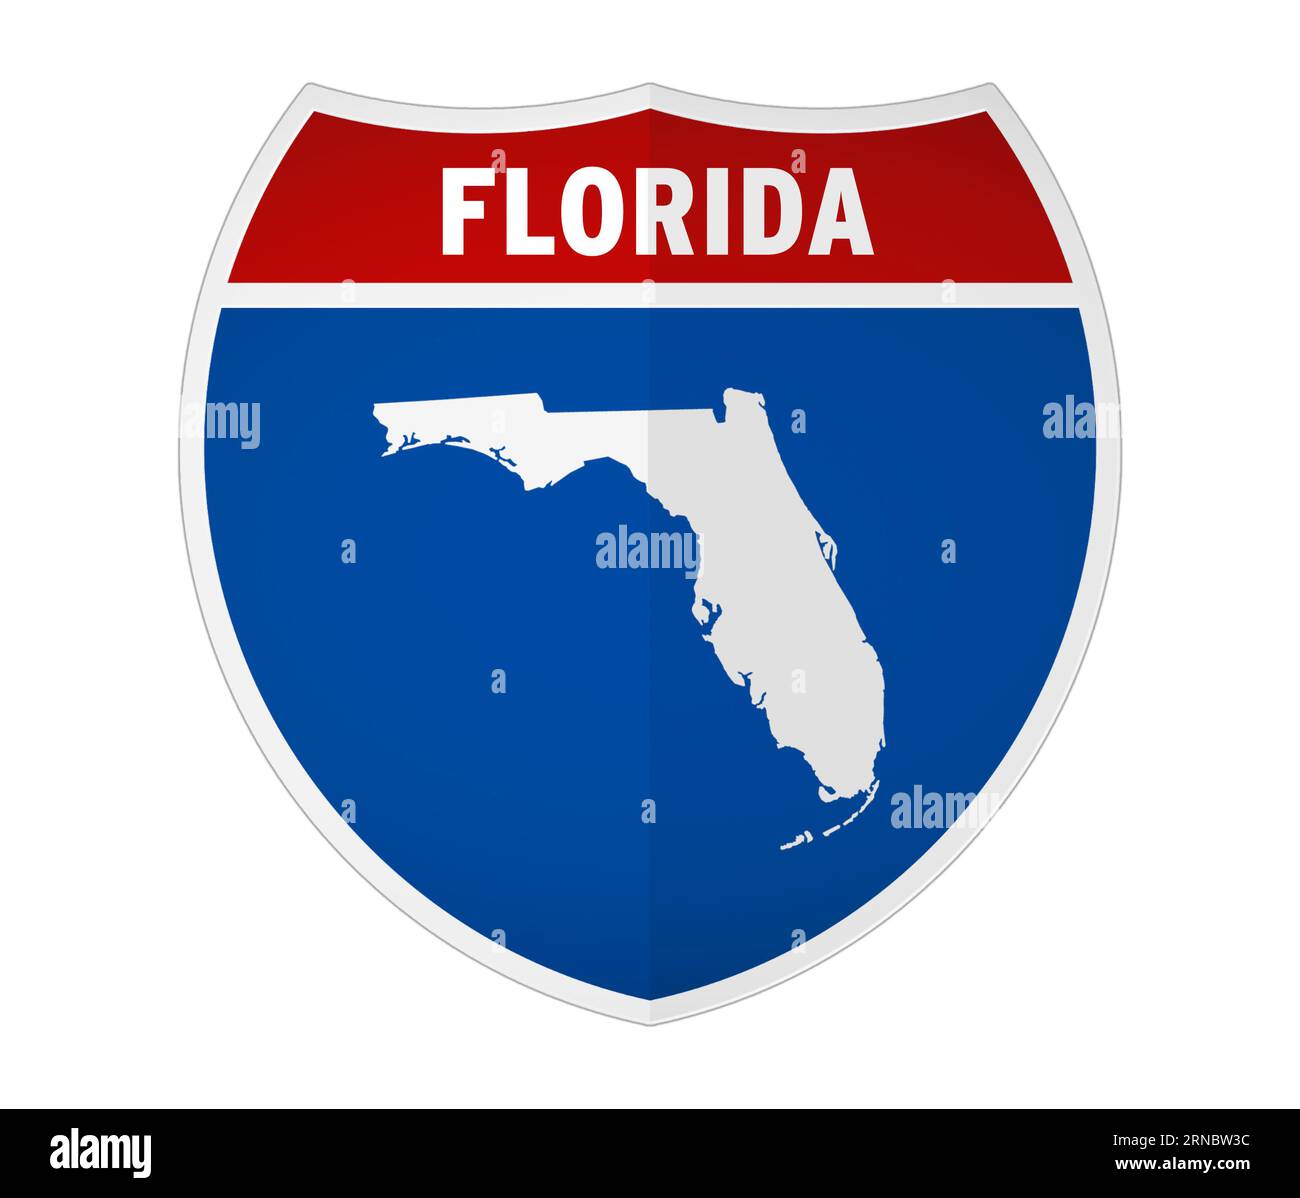 Florida - Interstate road sign Stock Photo